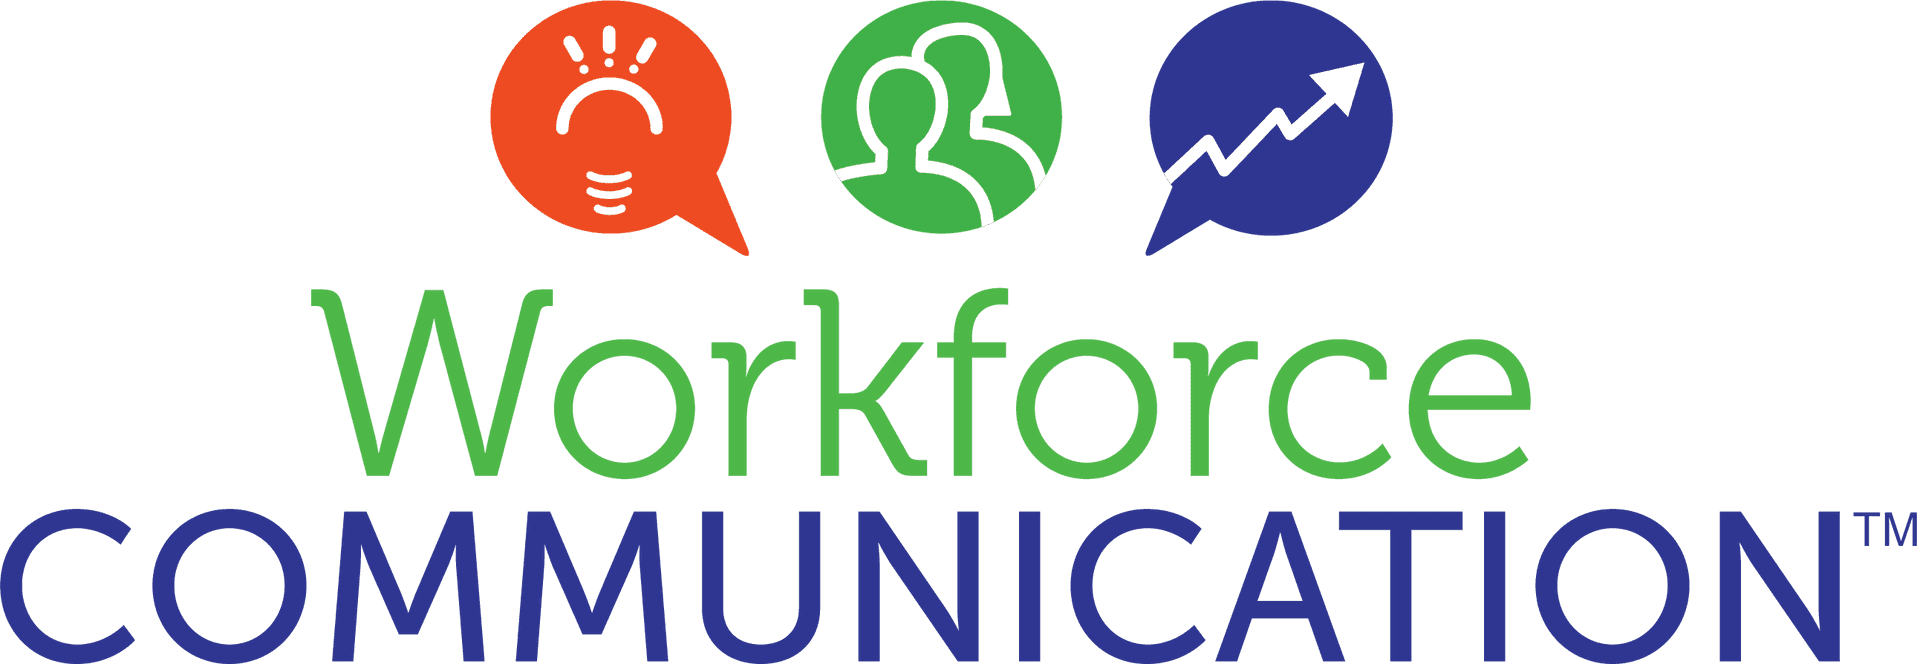 Workforce Communication Logo PNG